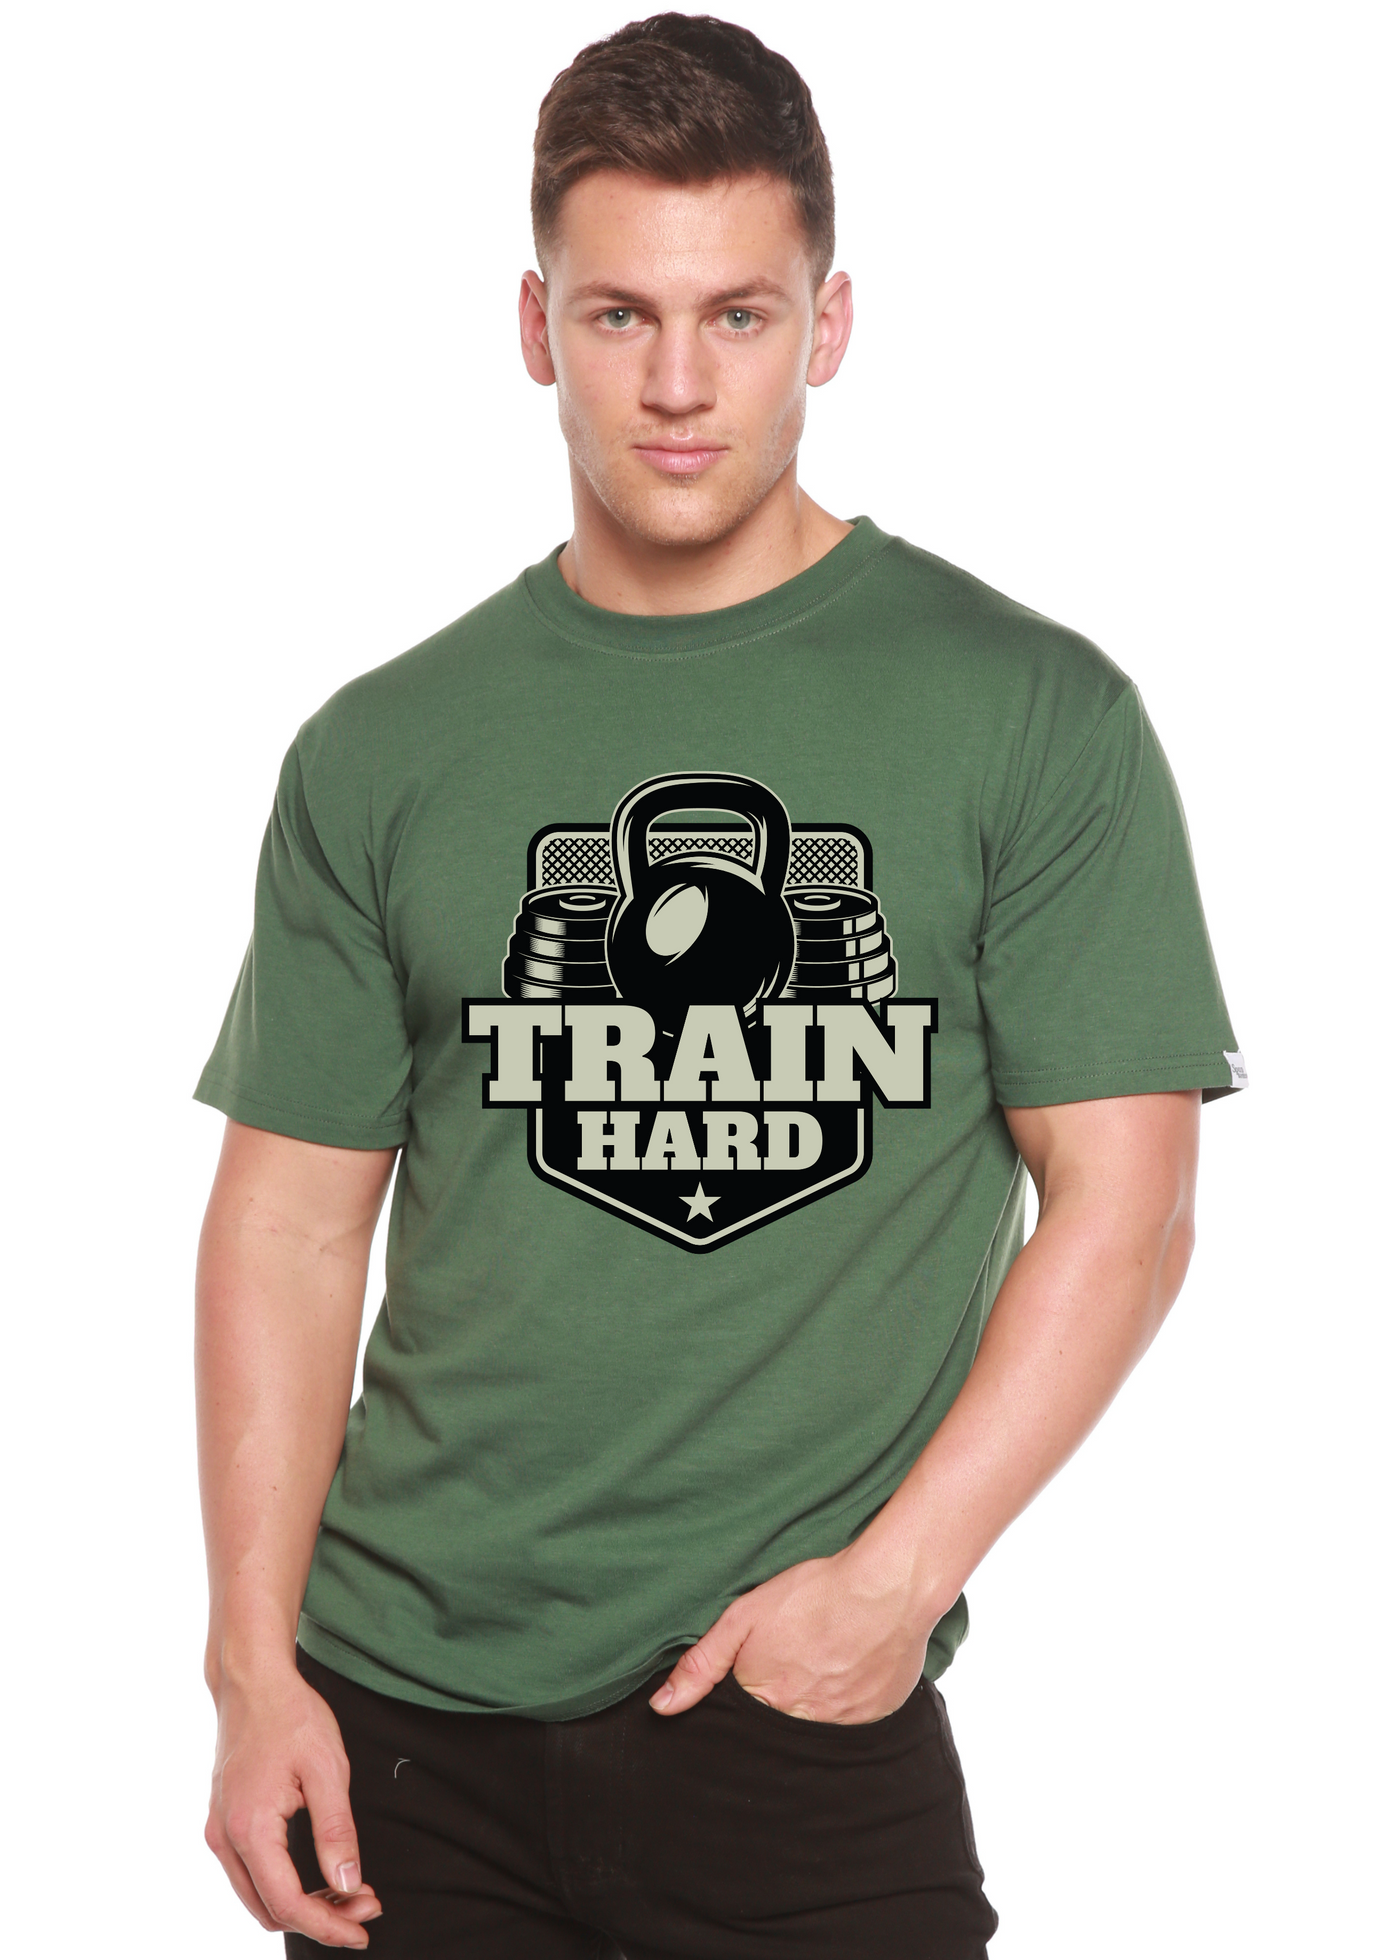 Train Hard men's bamboo tshirt pine green